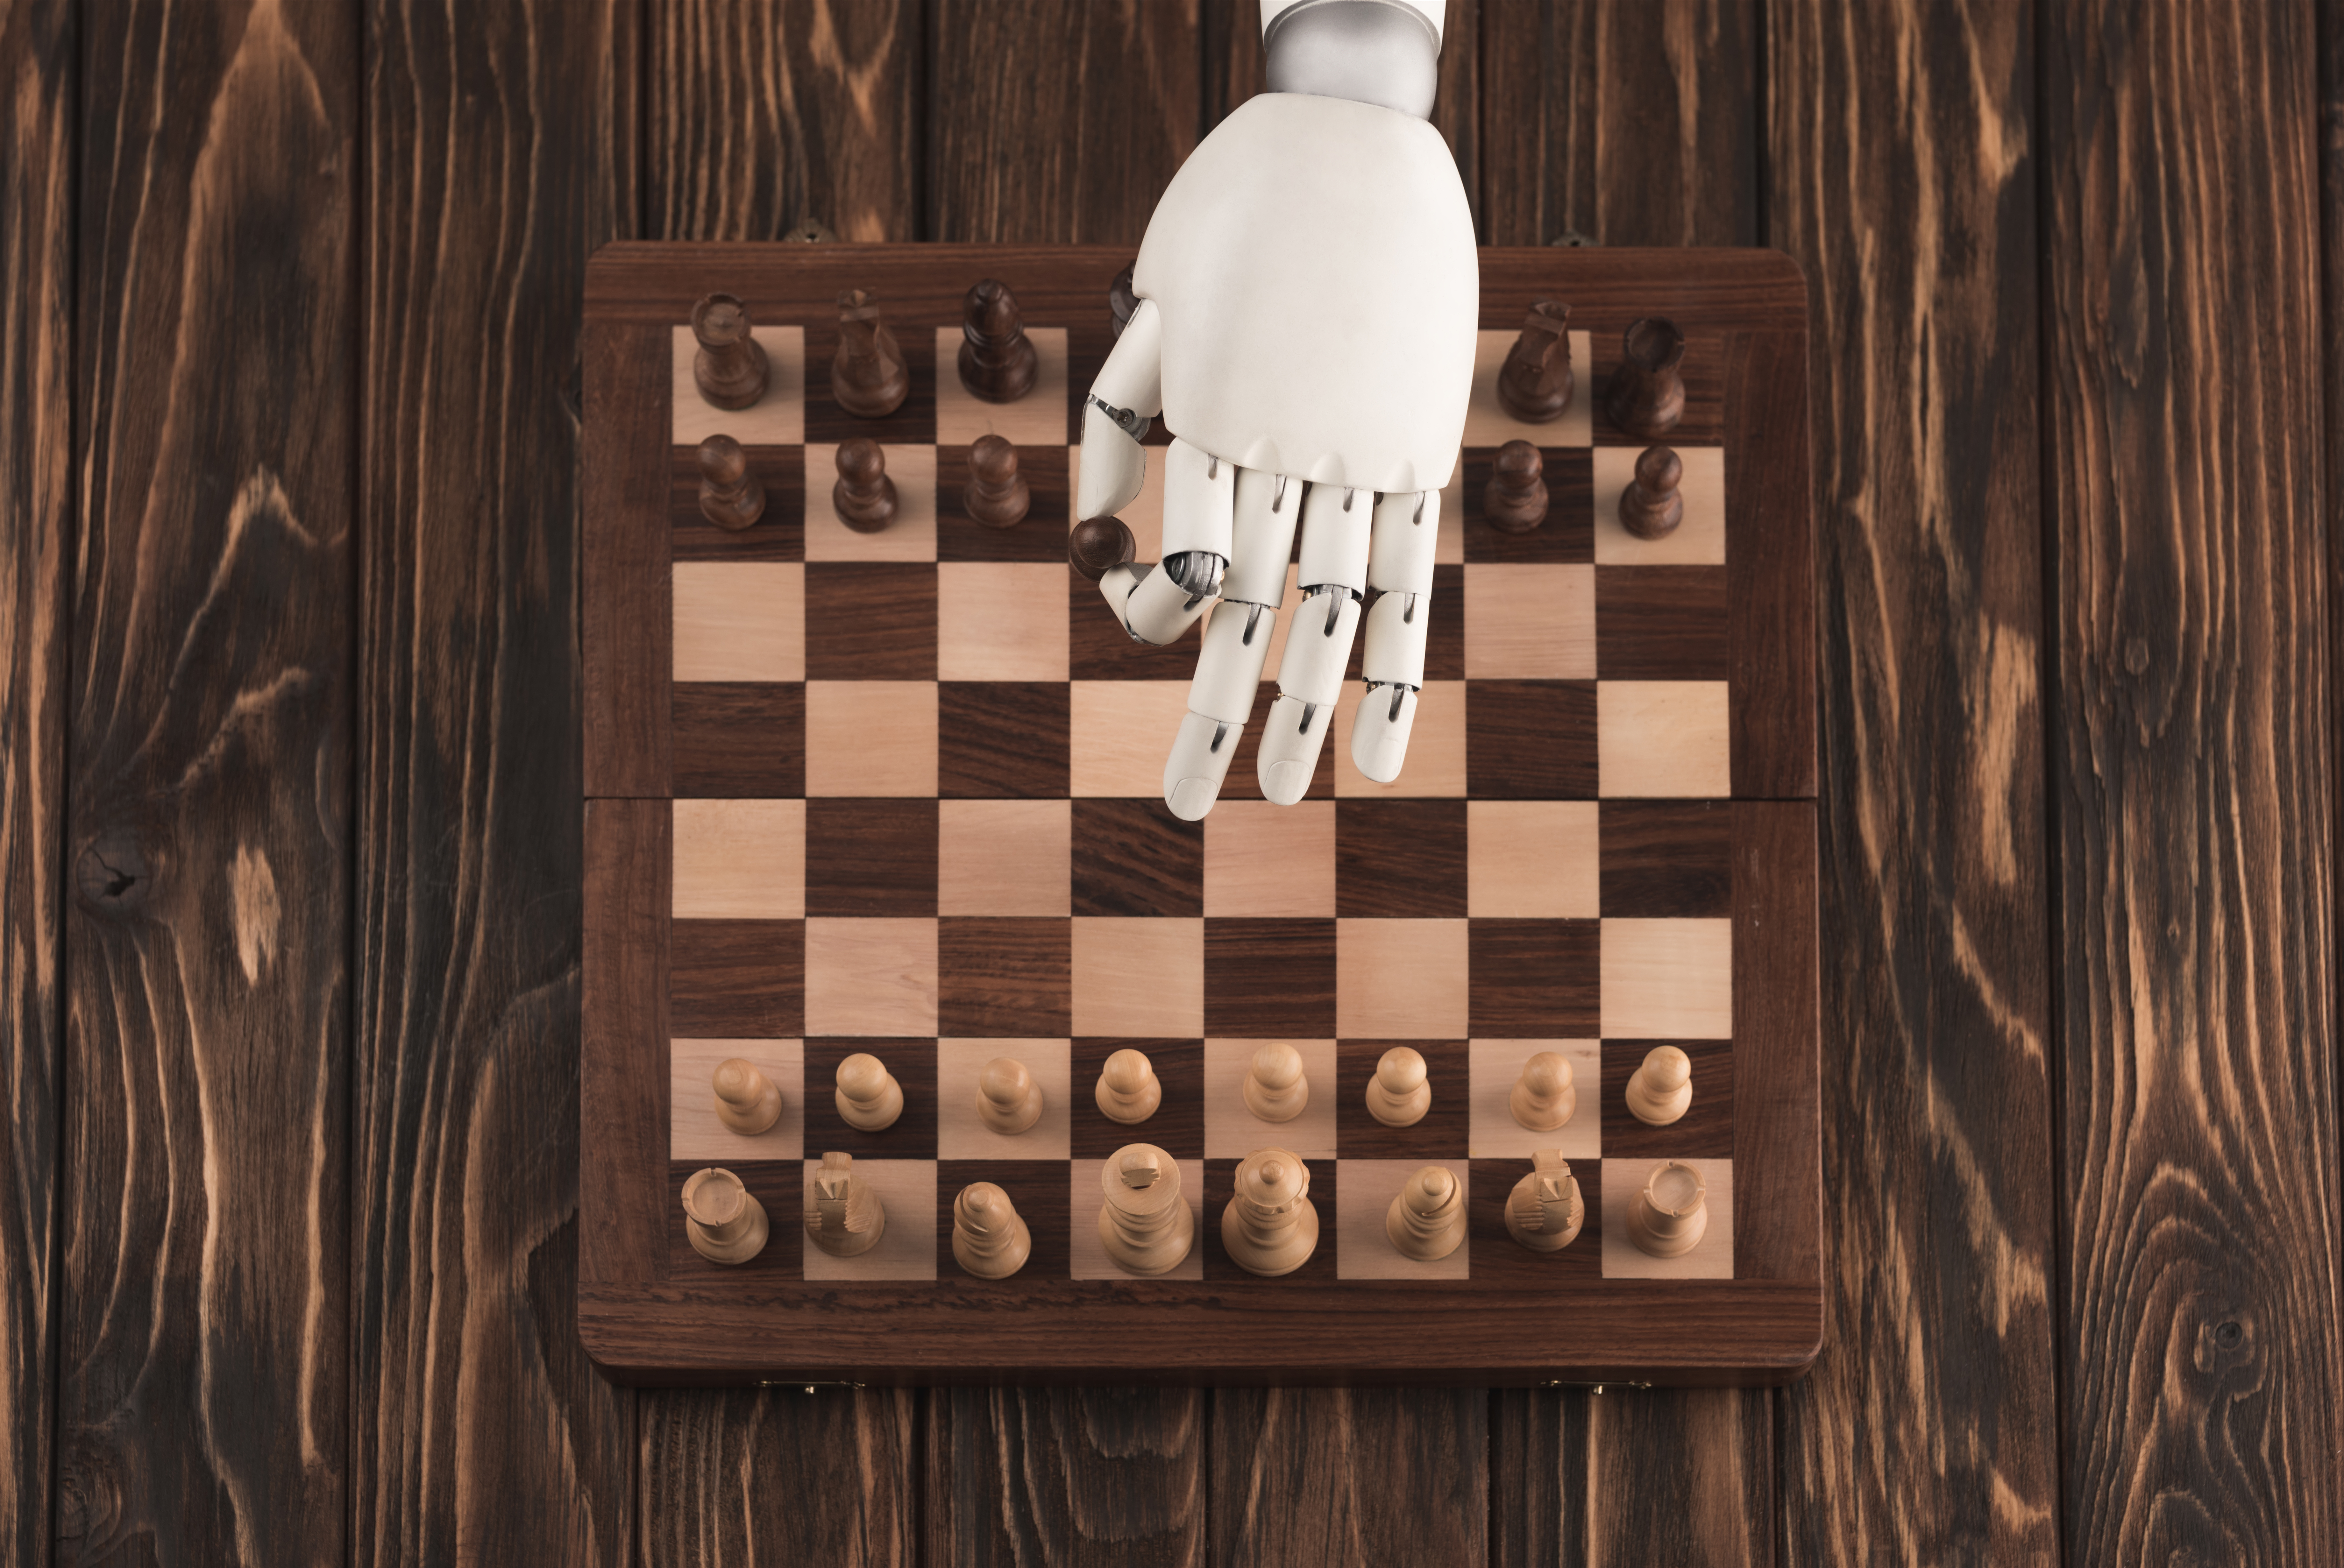 Un robot juega al ajedrez (Crédito: Ibero León)